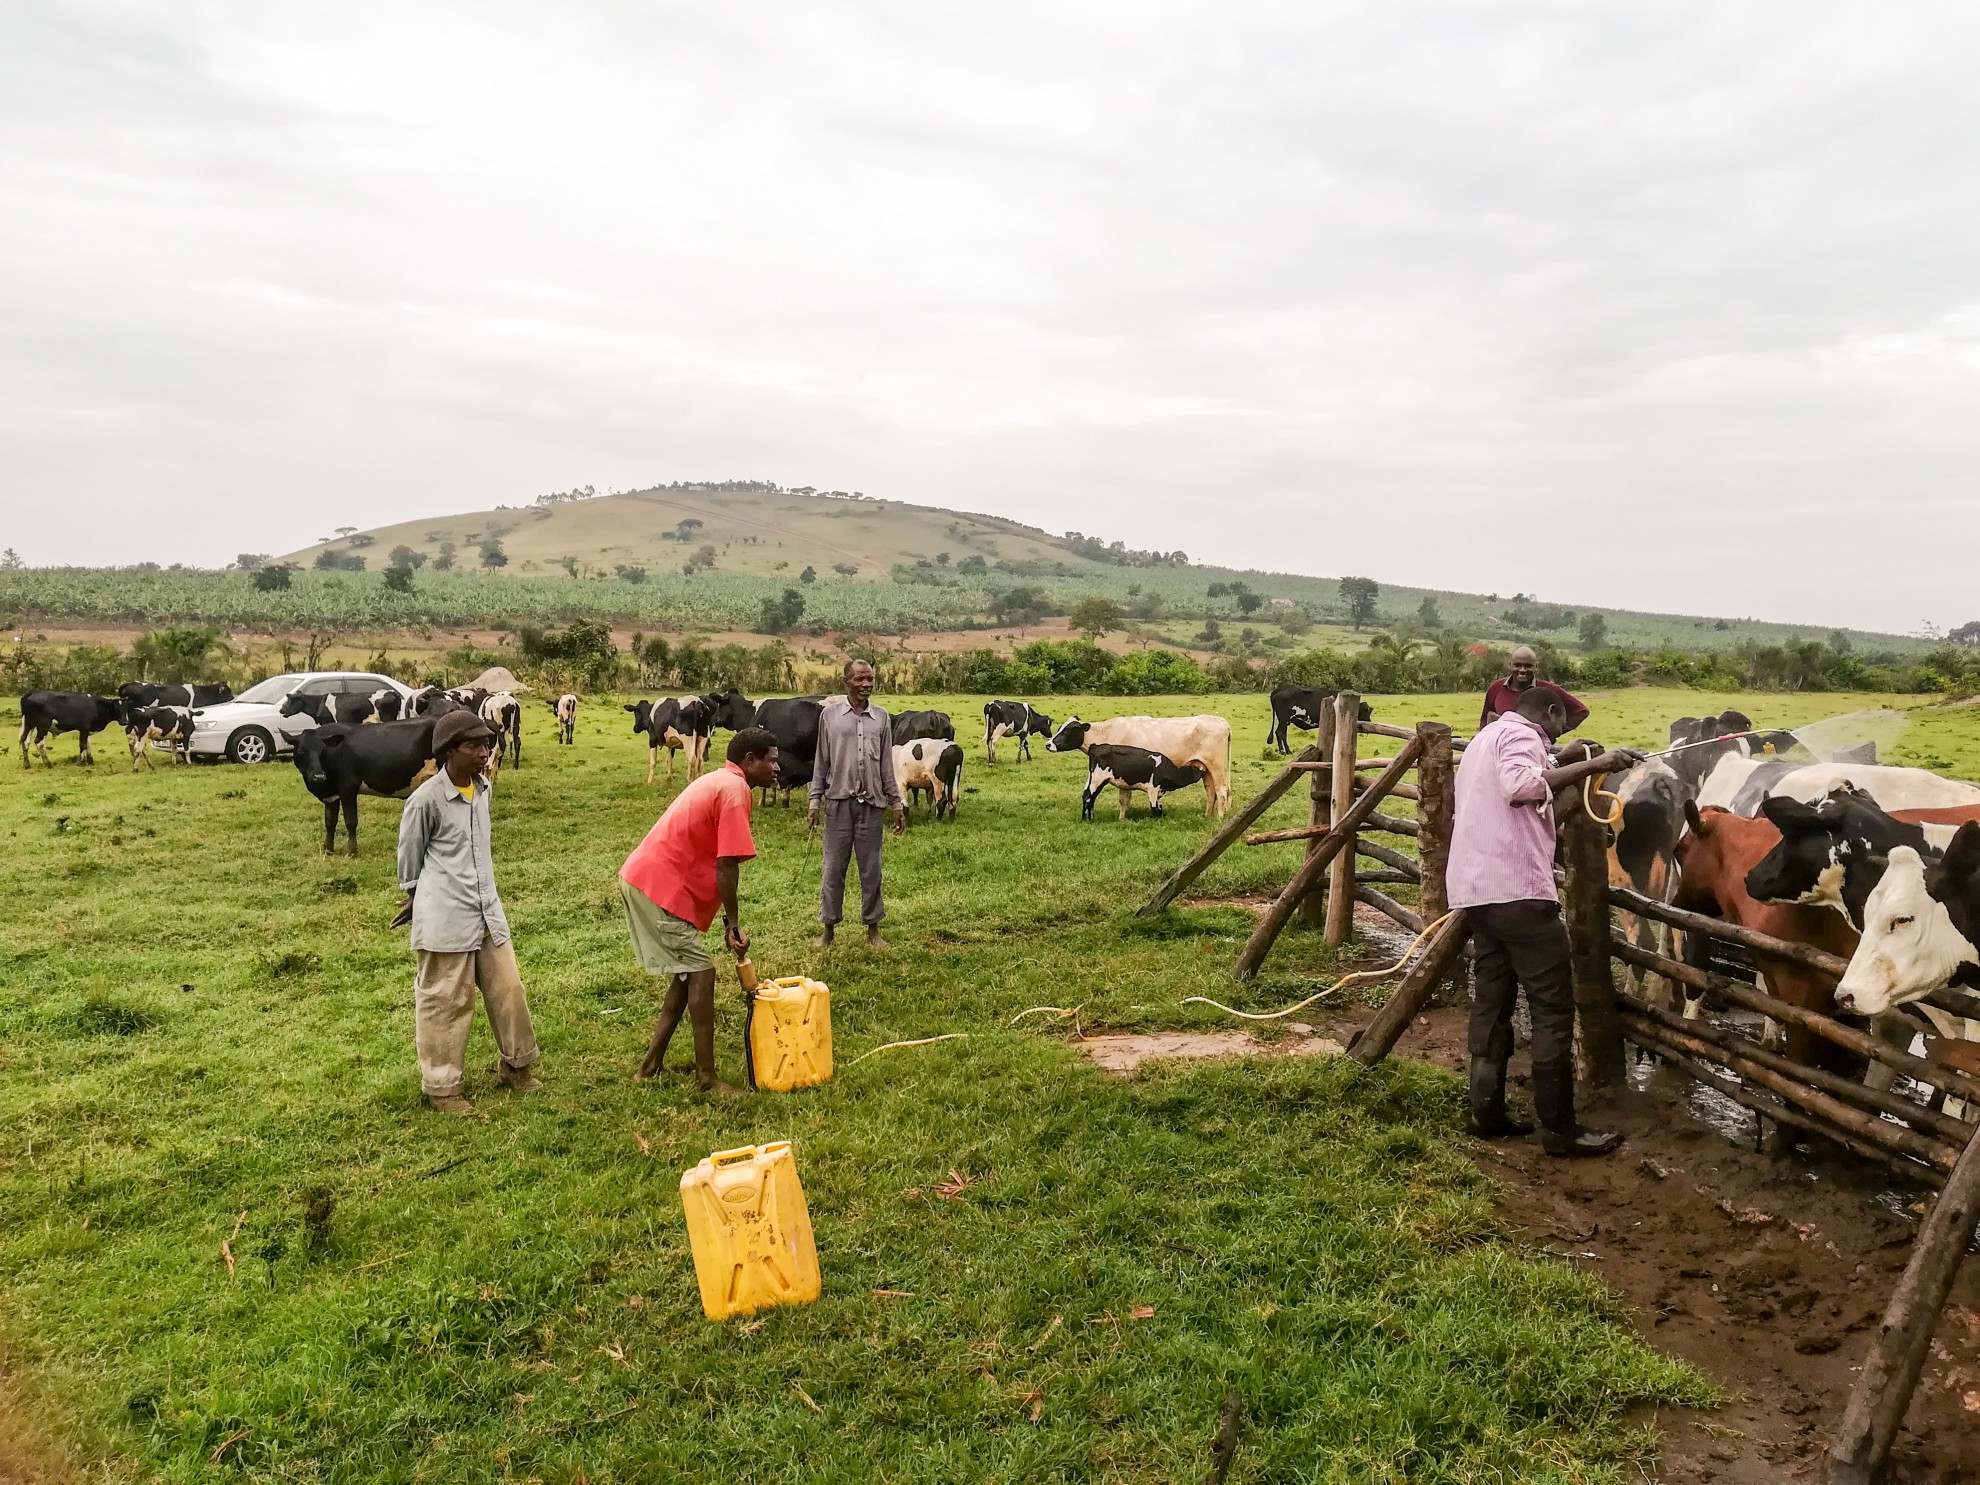 dairy farming business plan in uganda